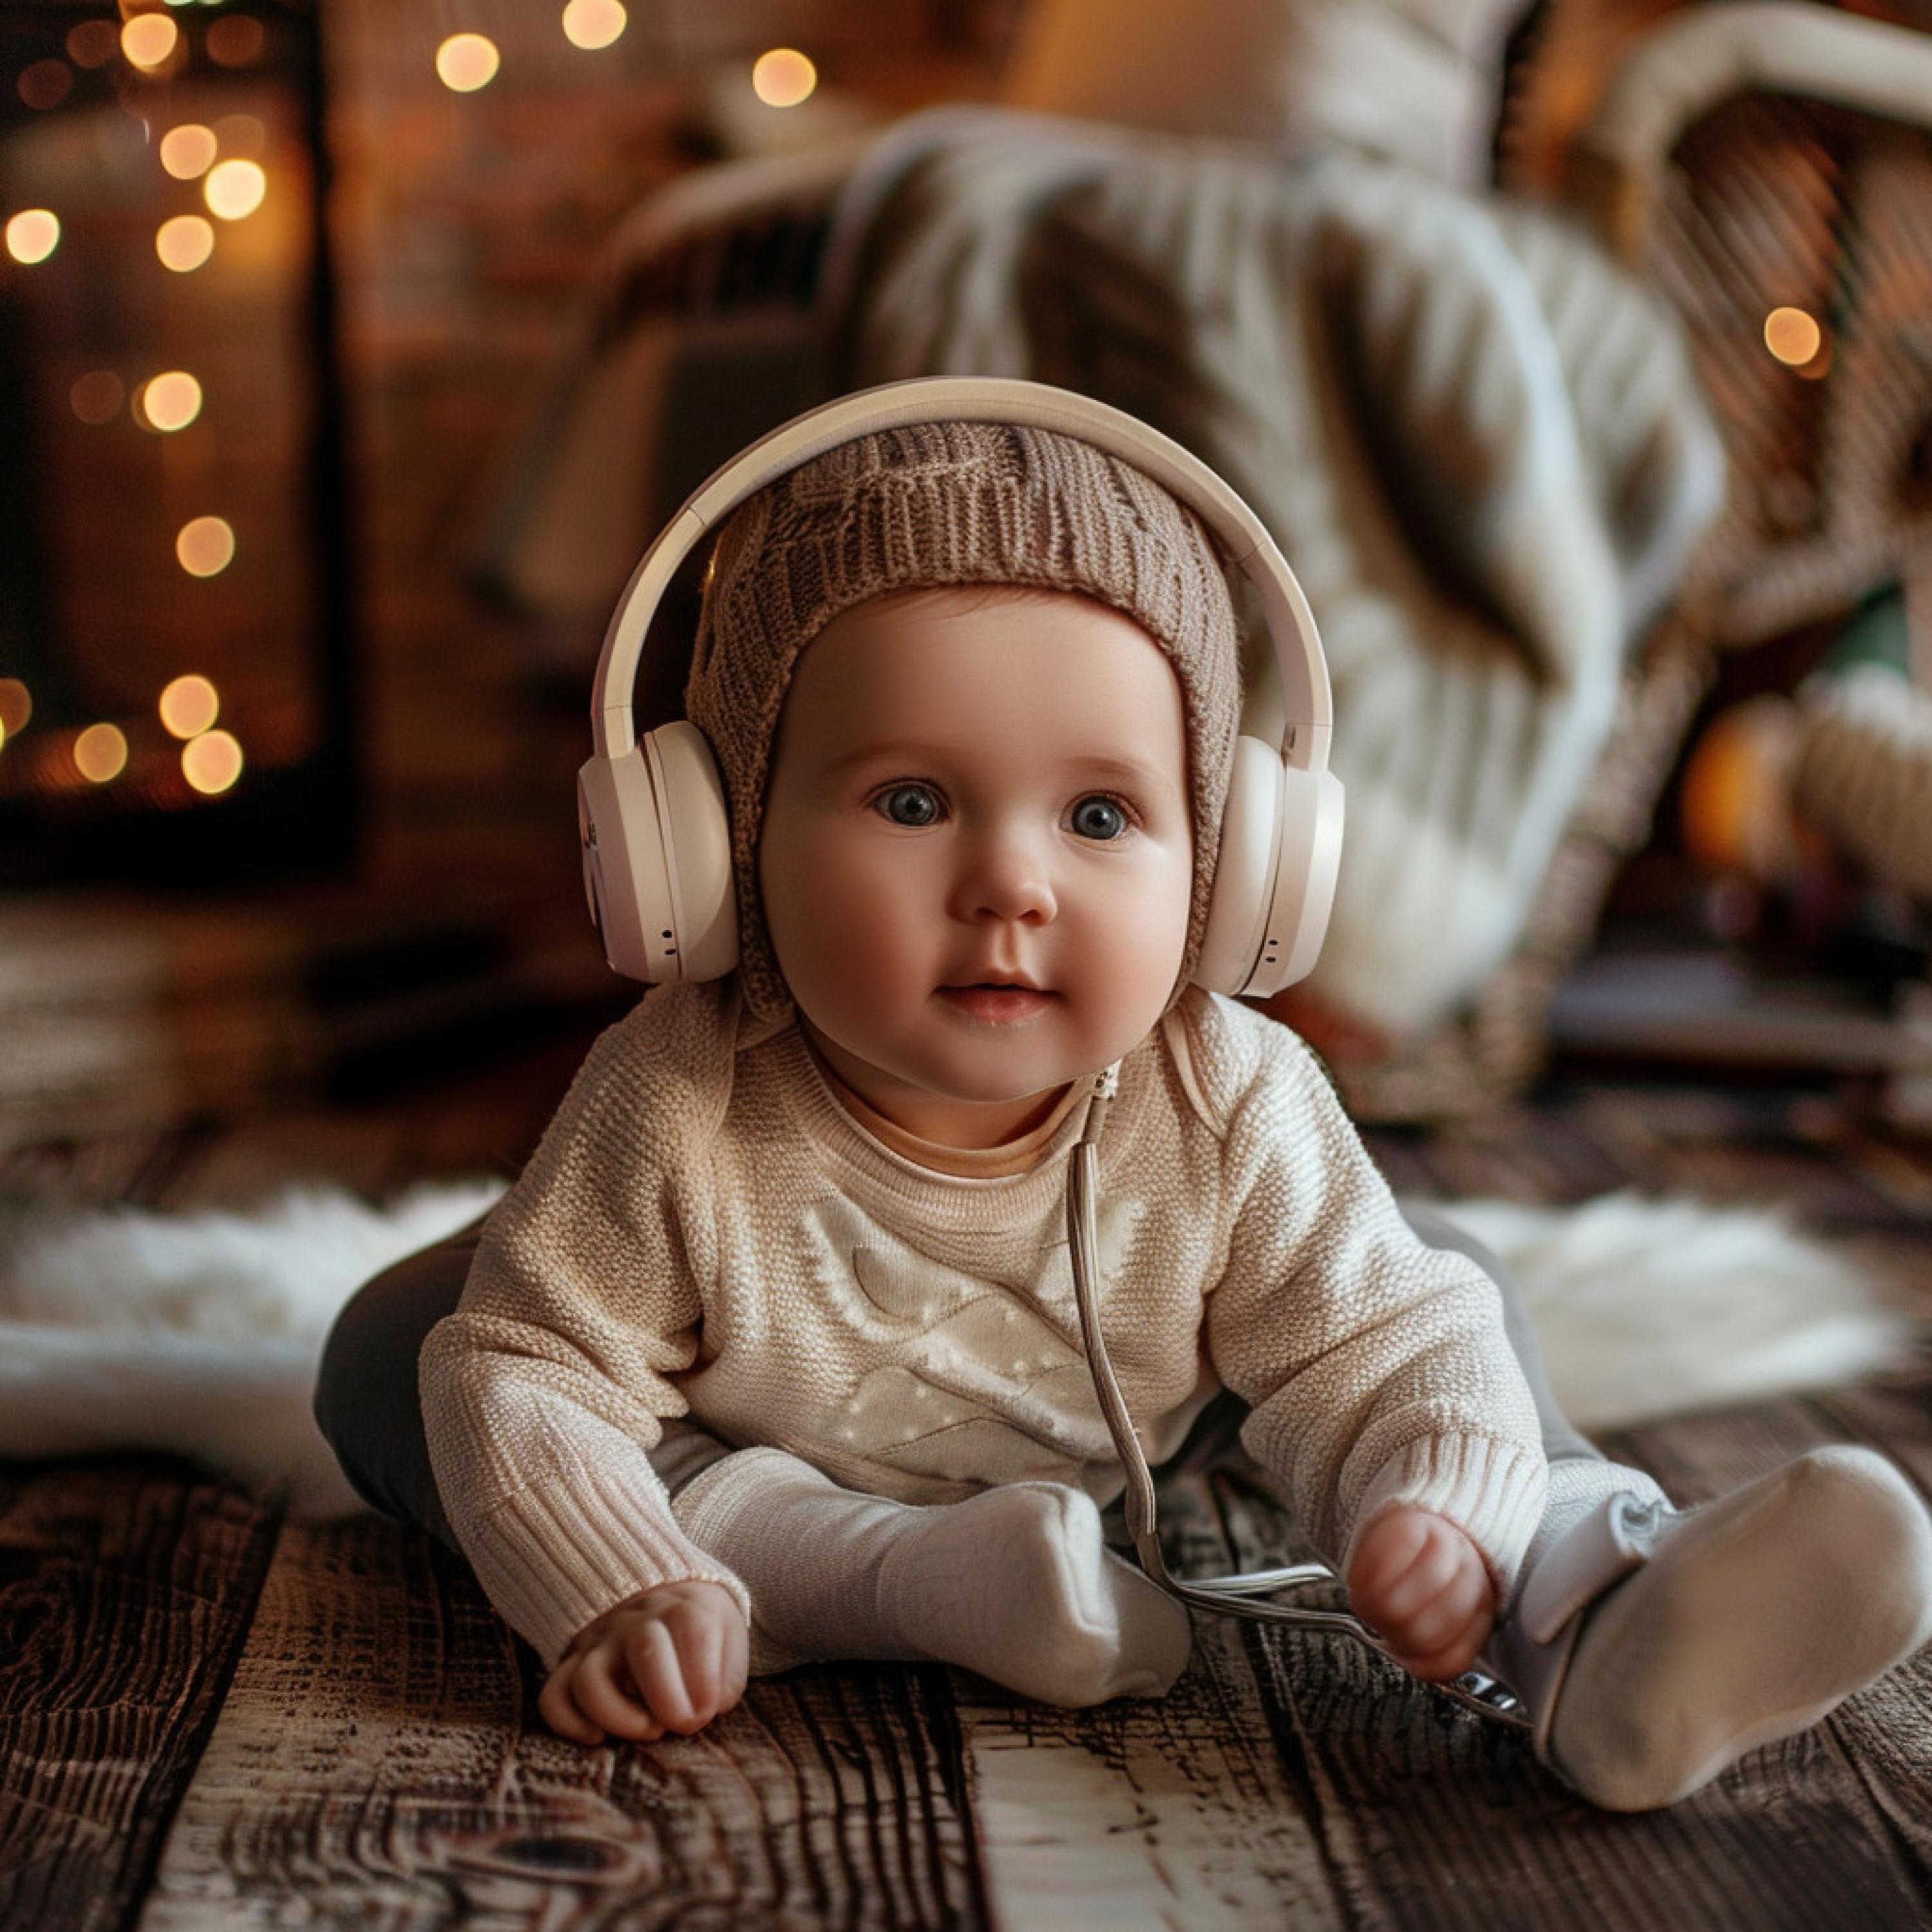 Music Box Baby Lullaby - Playful Patter Patterns